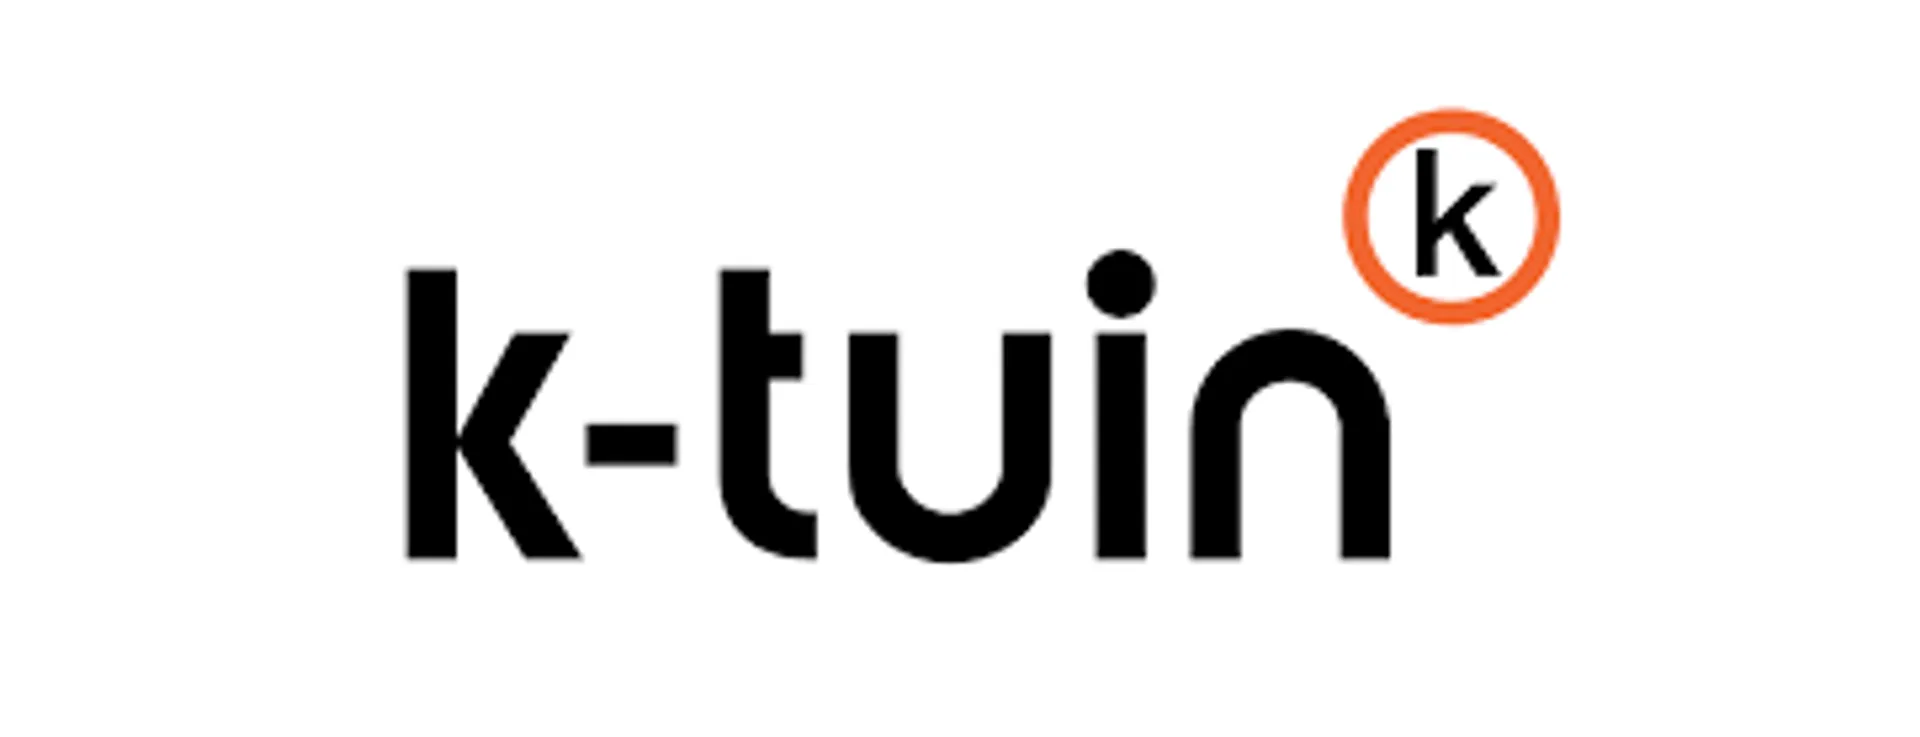 K-TUIN logo de catálogo